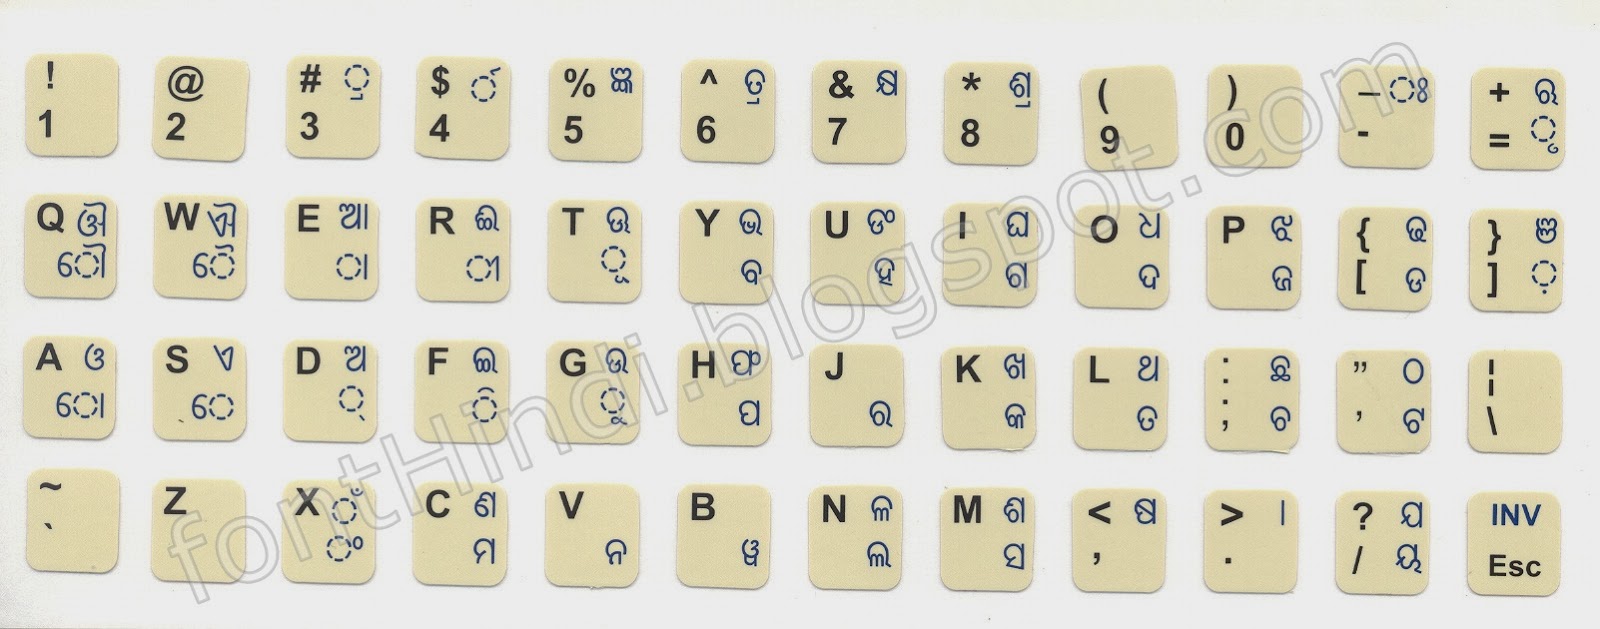 Bangla Inscript Keyboard Layout